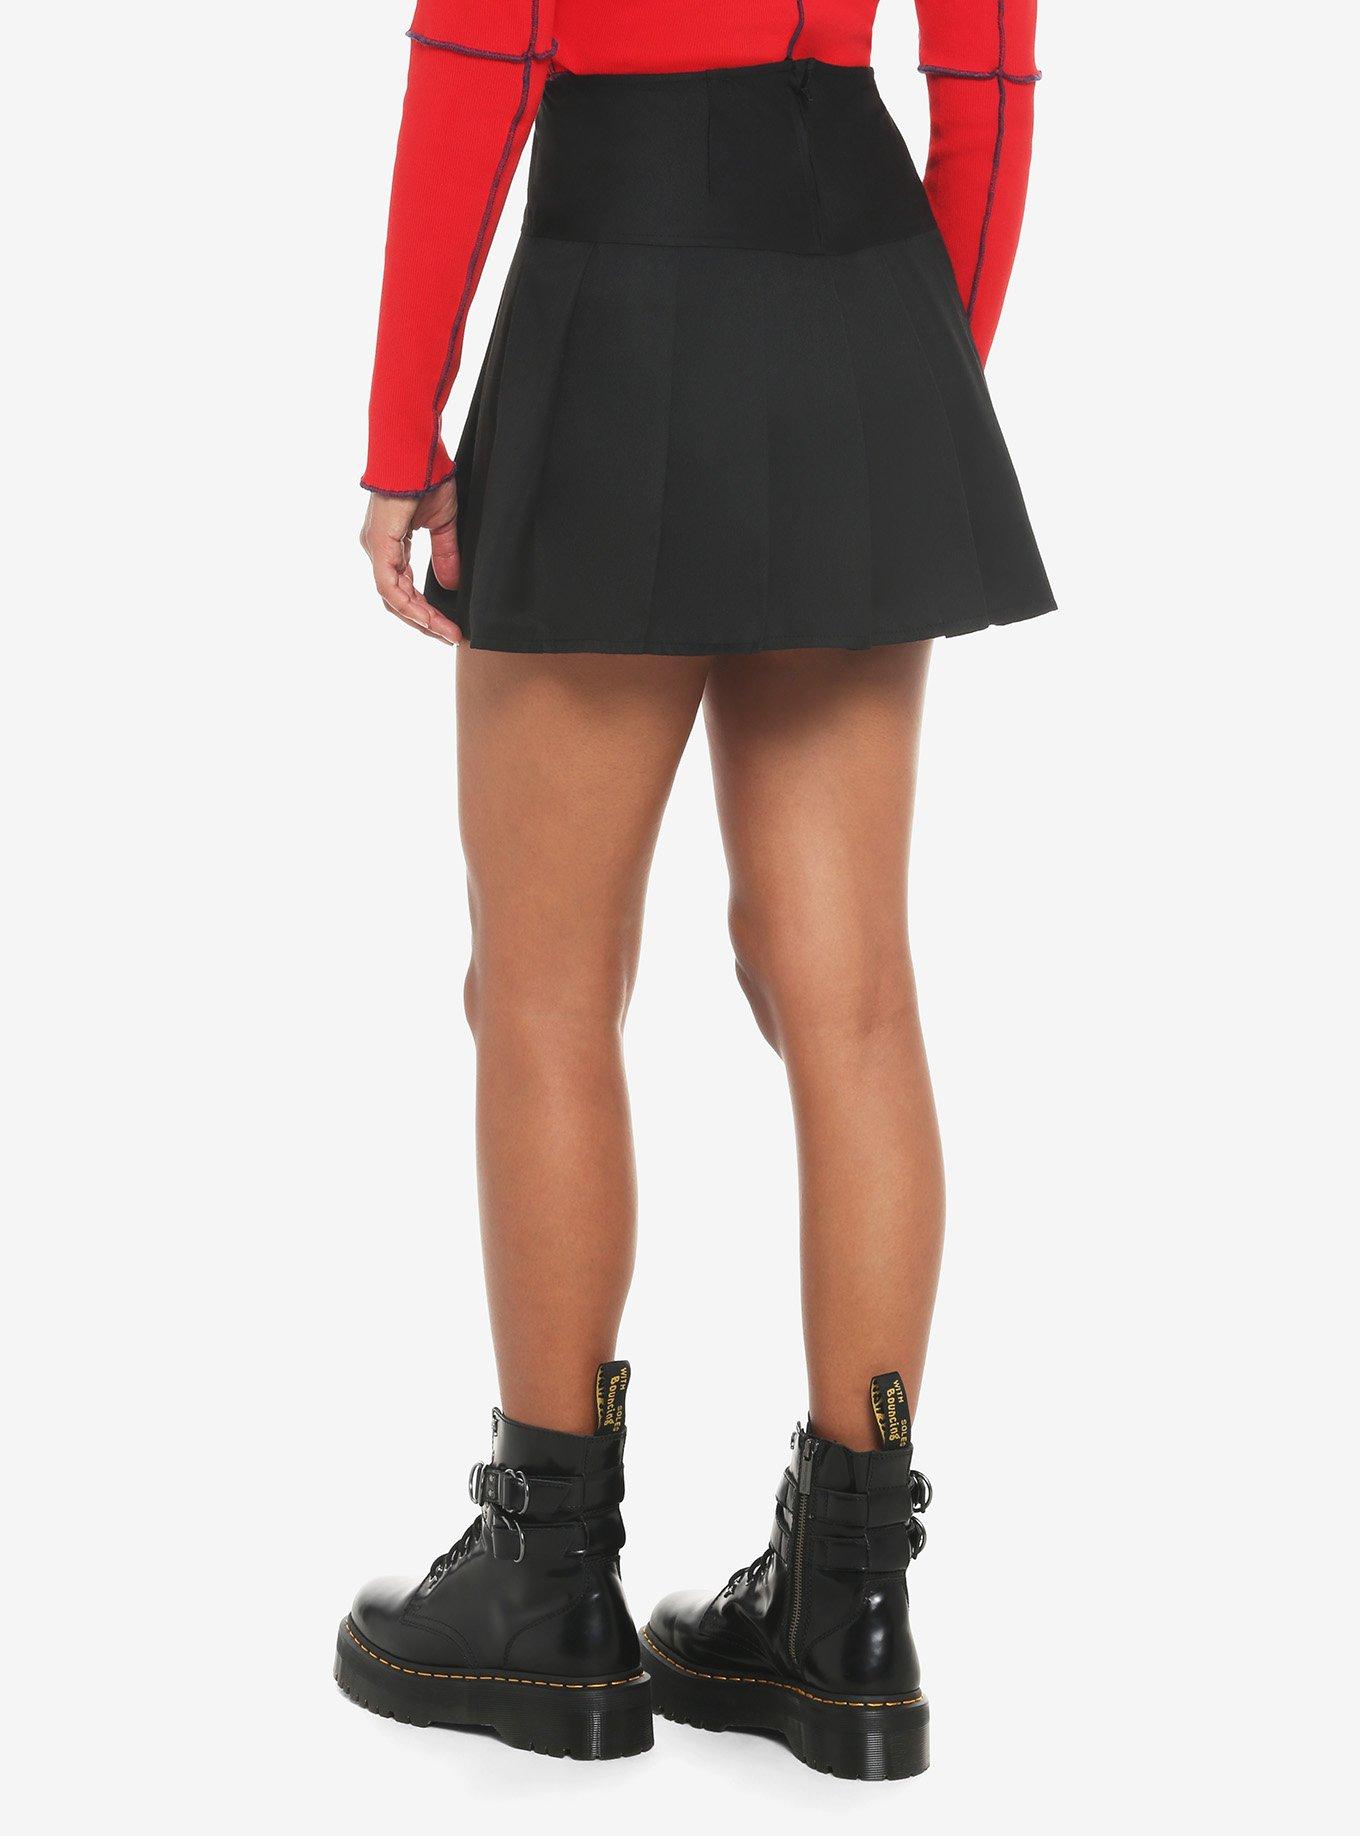 Safety Pin Pleated Skirt, BLACK, alternate